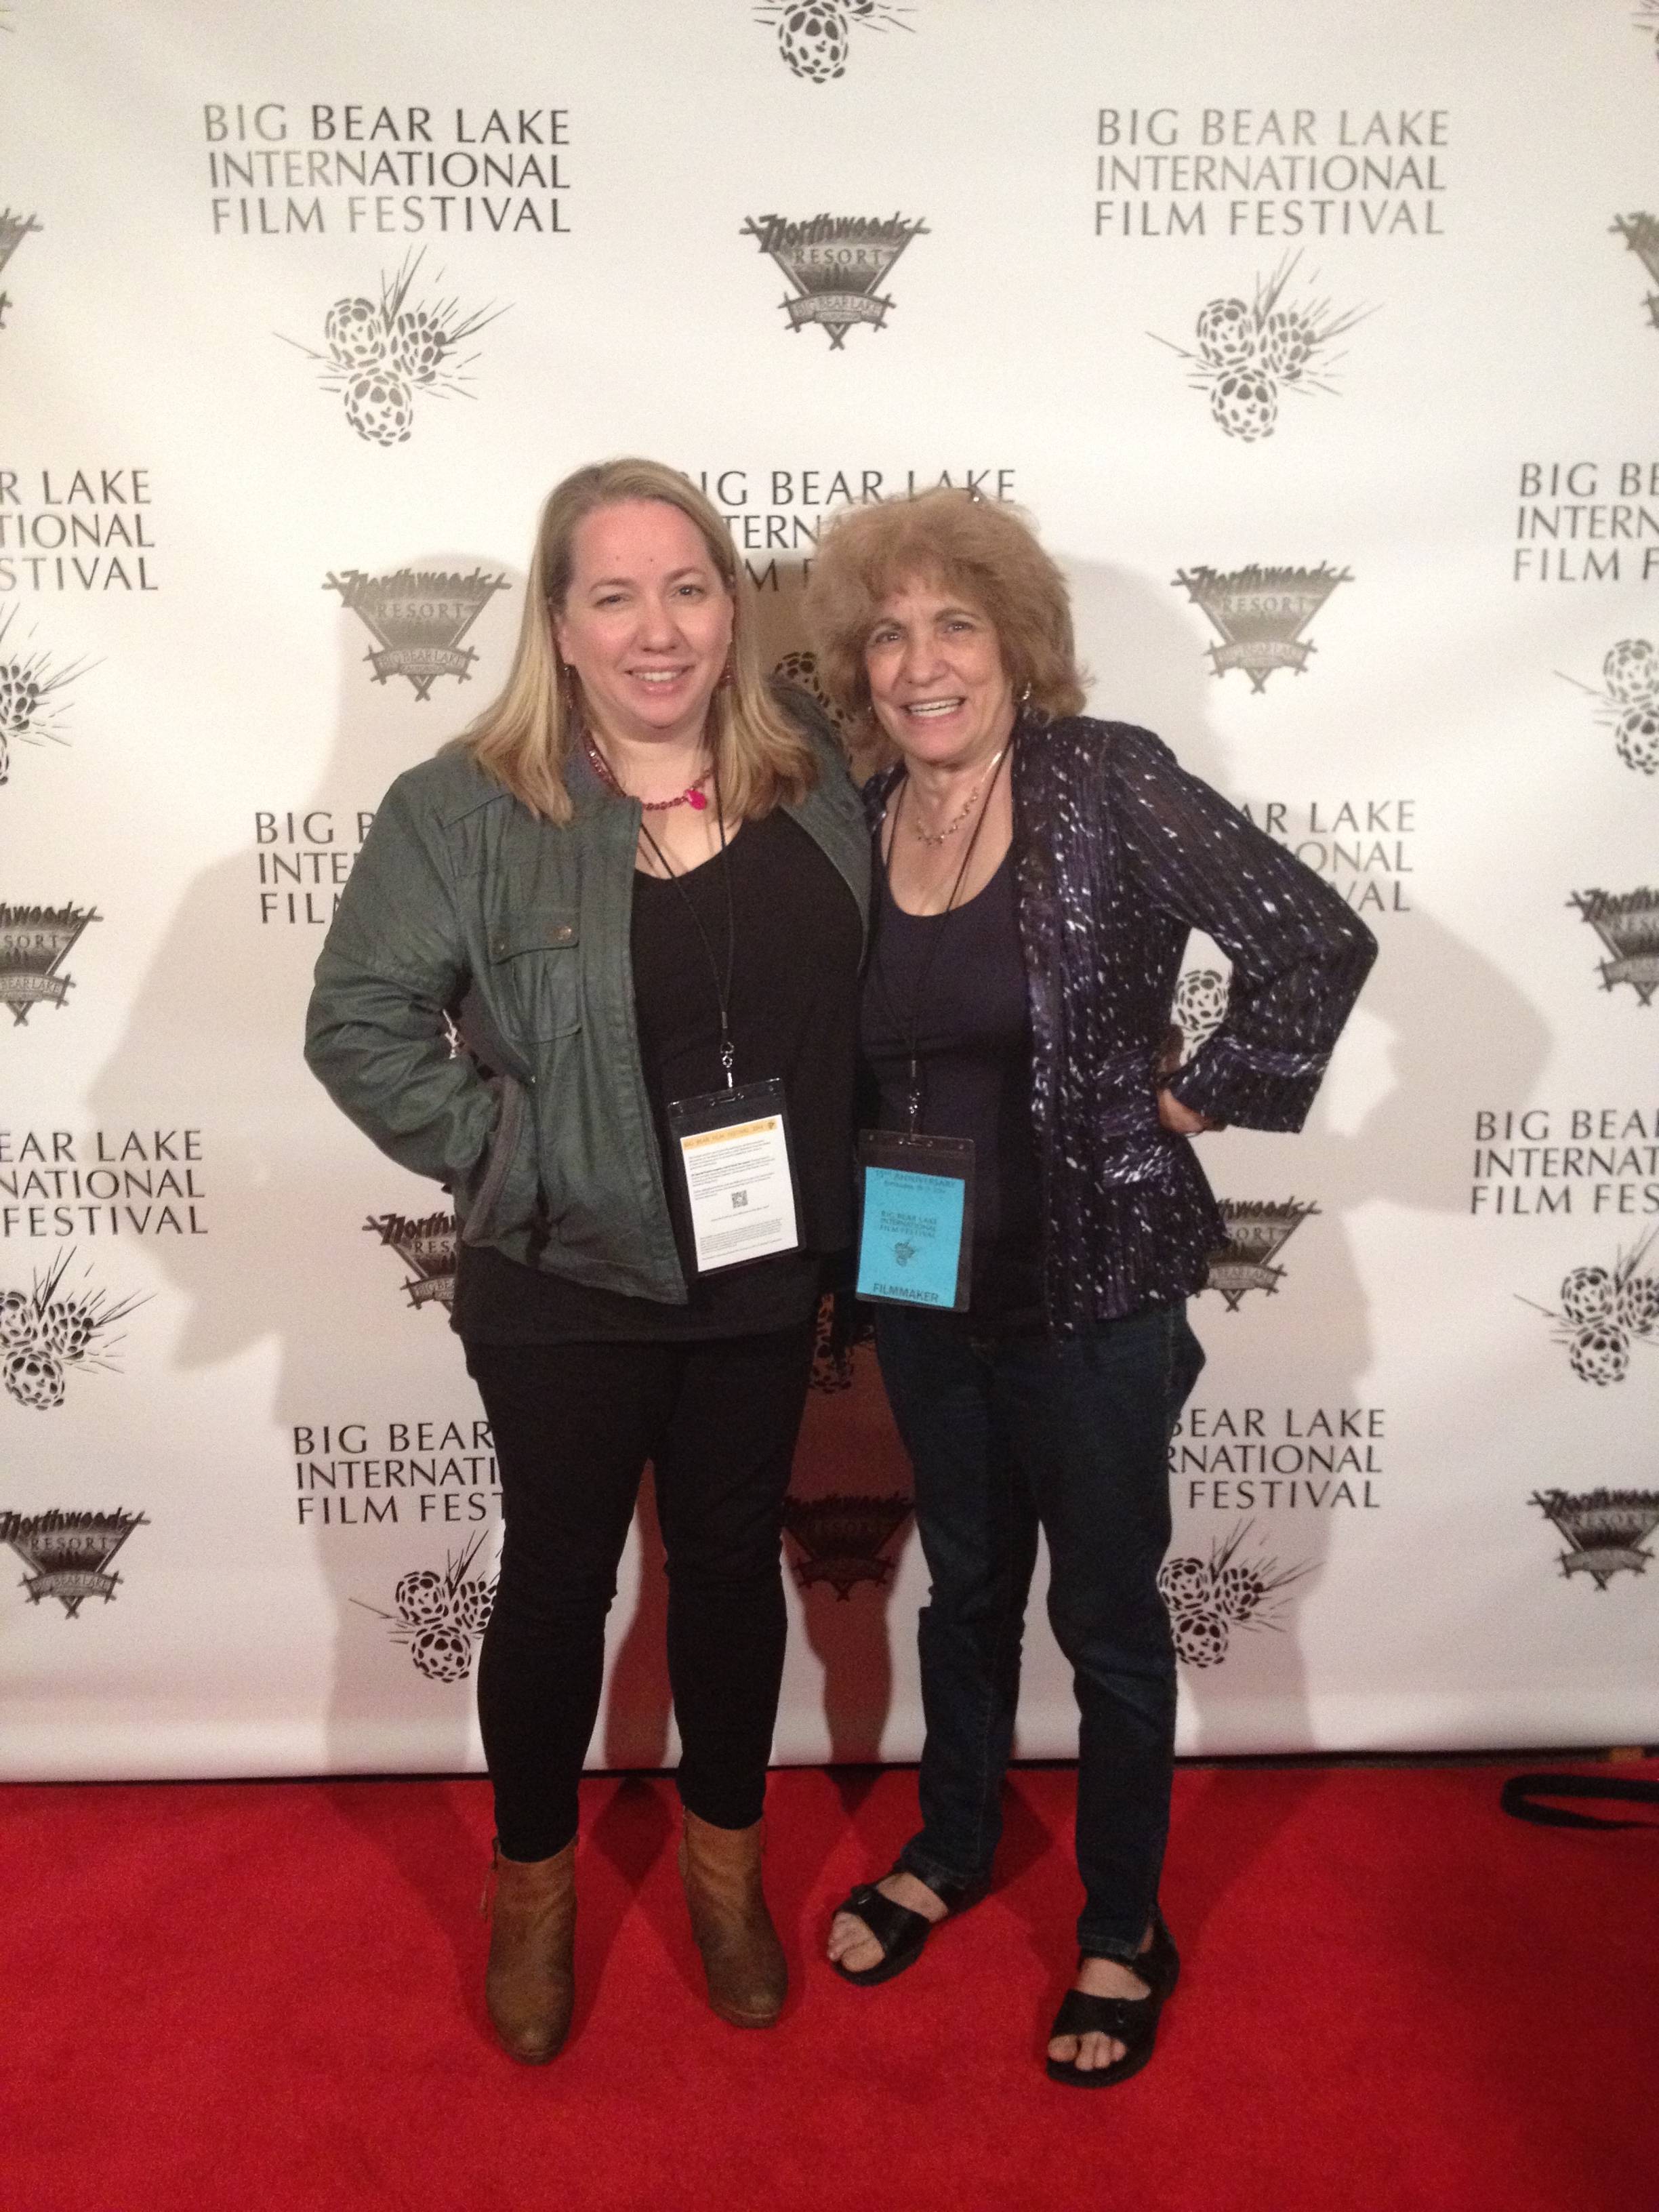 Dawn Higginbotham and Susan Higginbotham with THE USUAL at Big Bear International Film Festival.